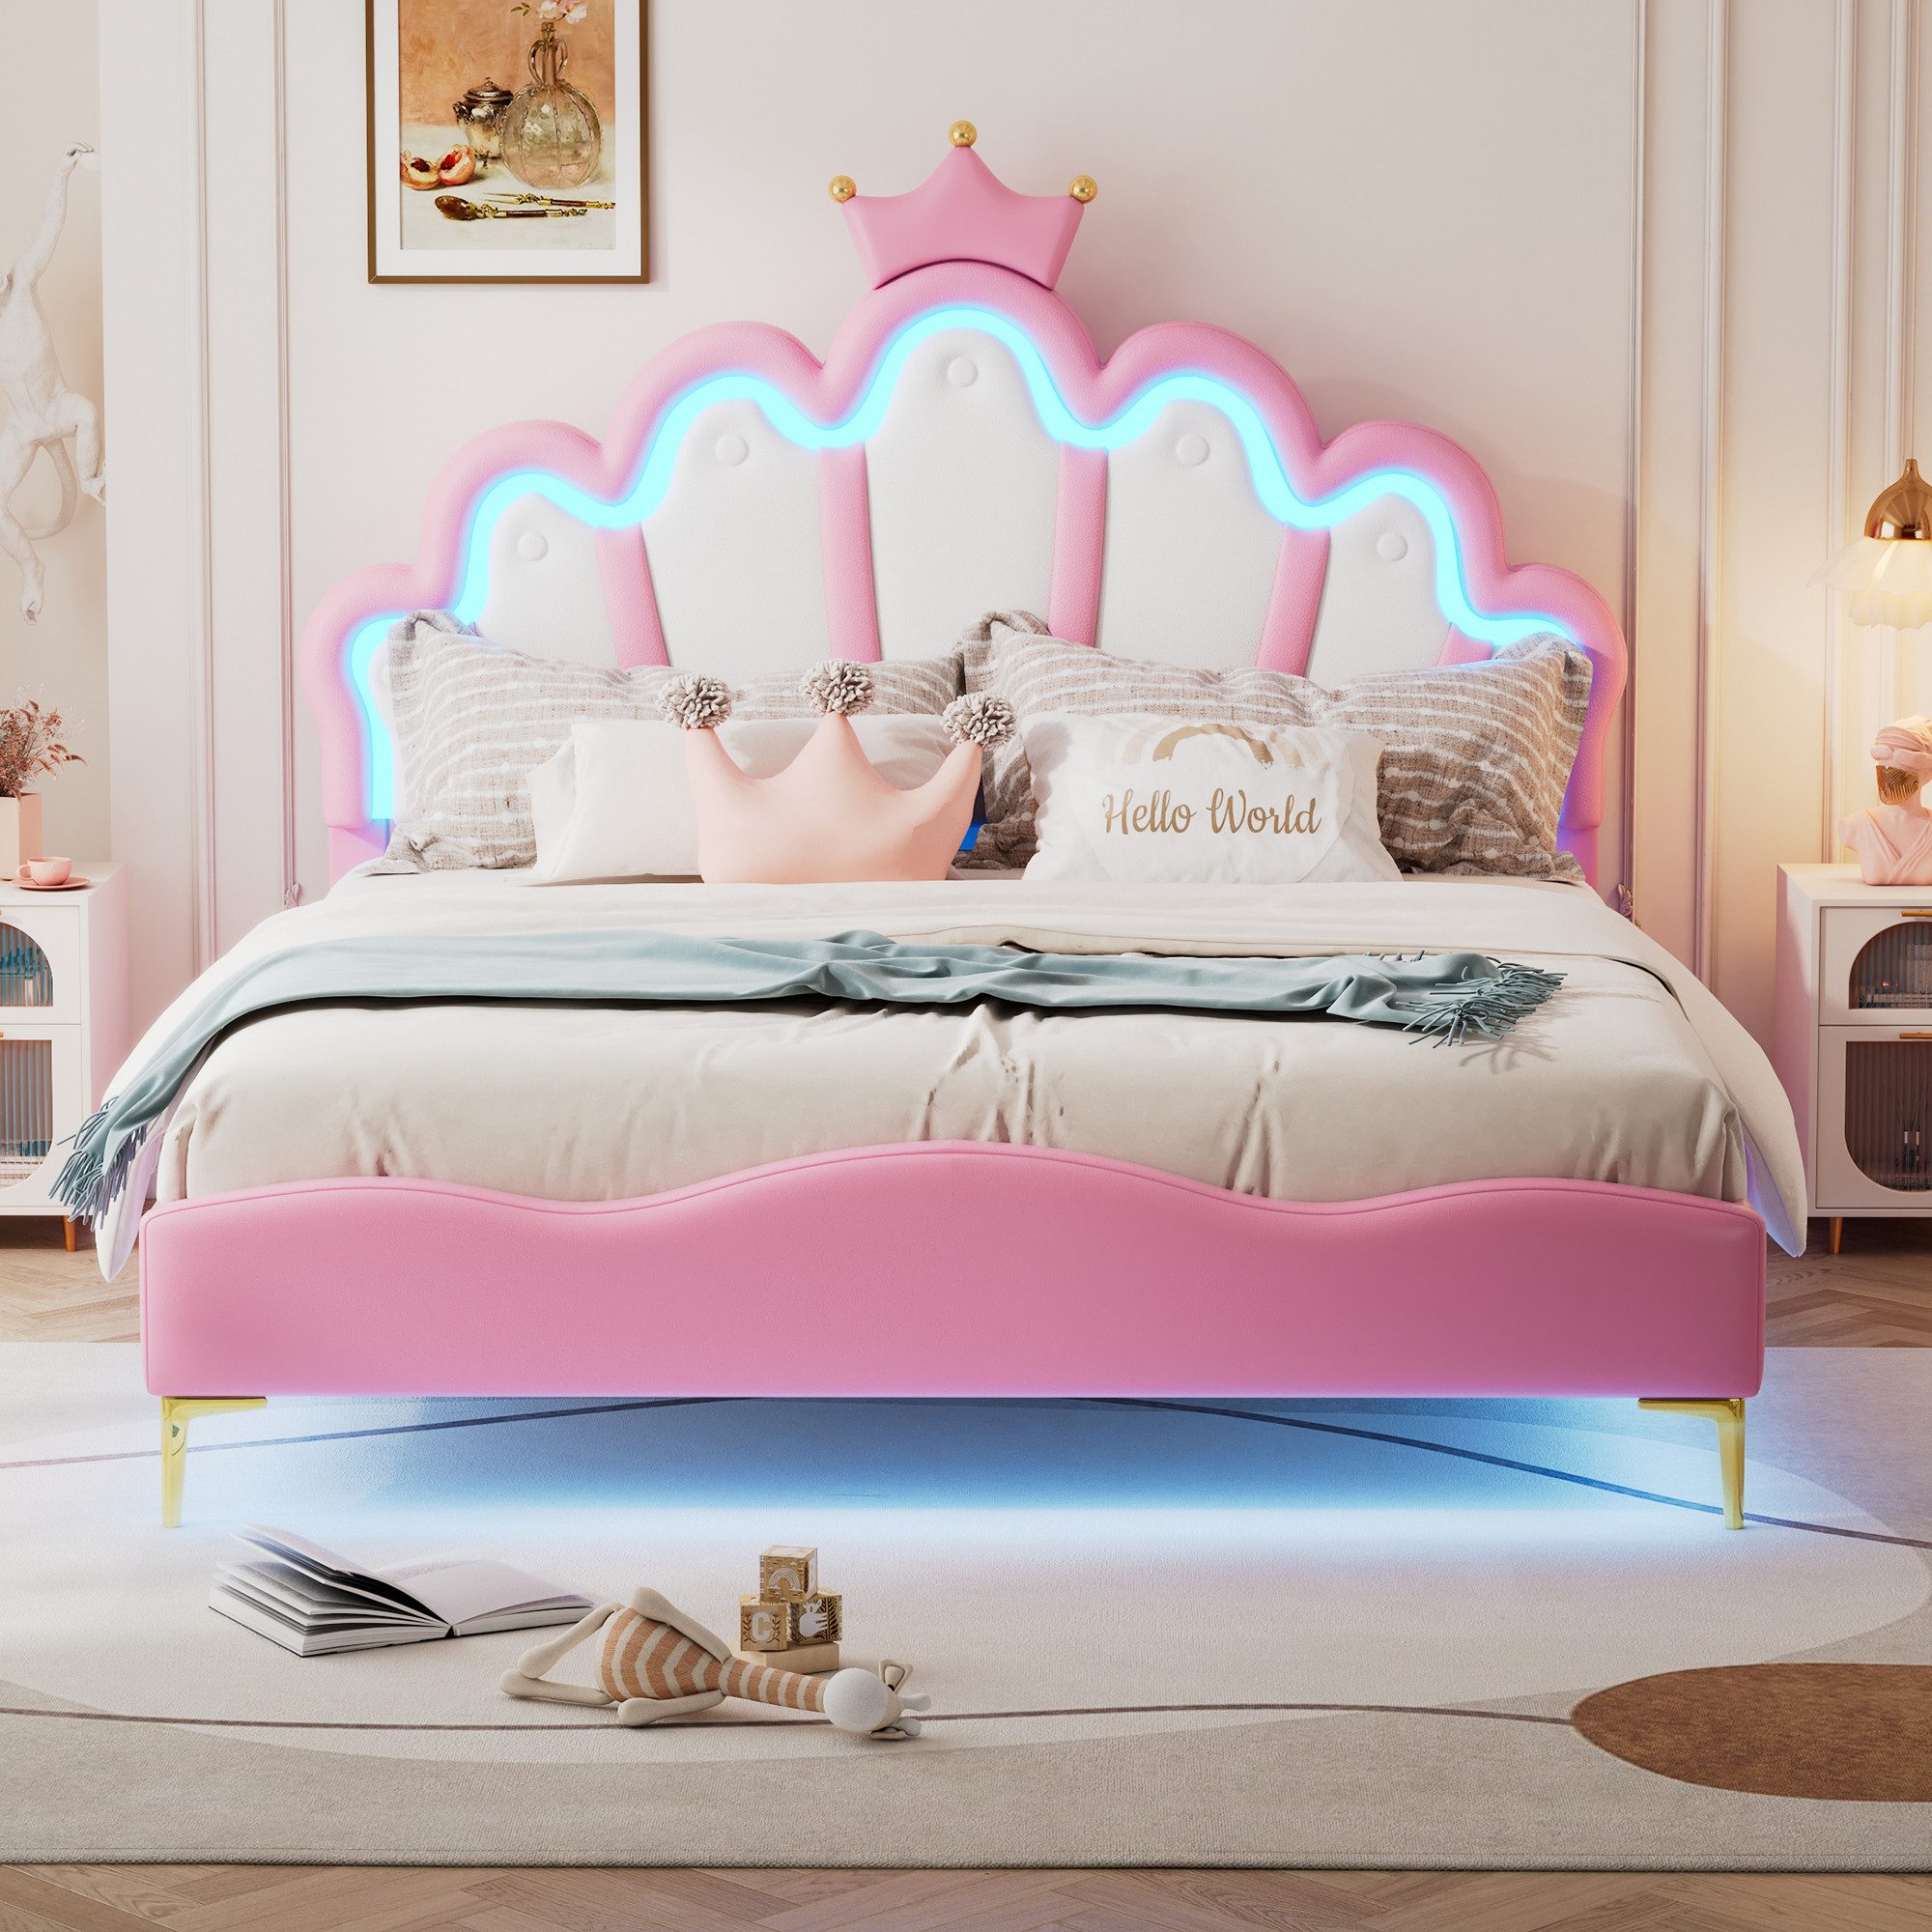 XDOVET Kinderbett 140*200cm Doppelbett, kronenförmiges Prinzessinnenbett, Polsterung aus PU-Leder, verstellbarer LED-Umlichtstreifen, Rosa